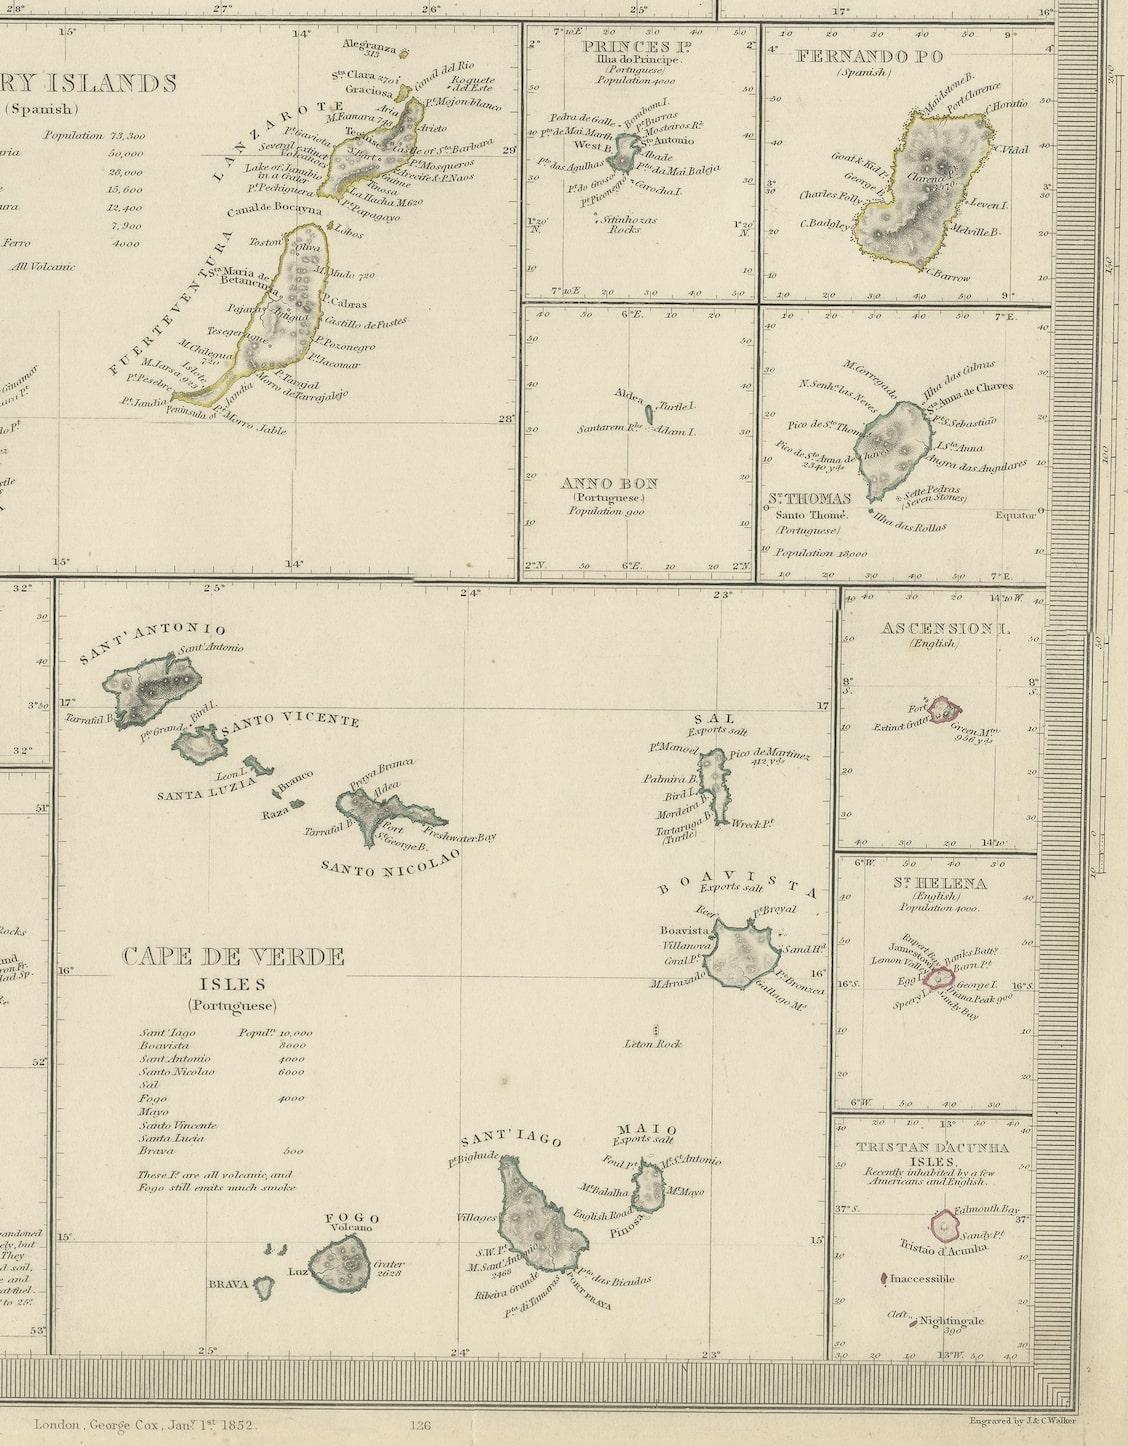 islands in the atlantic map